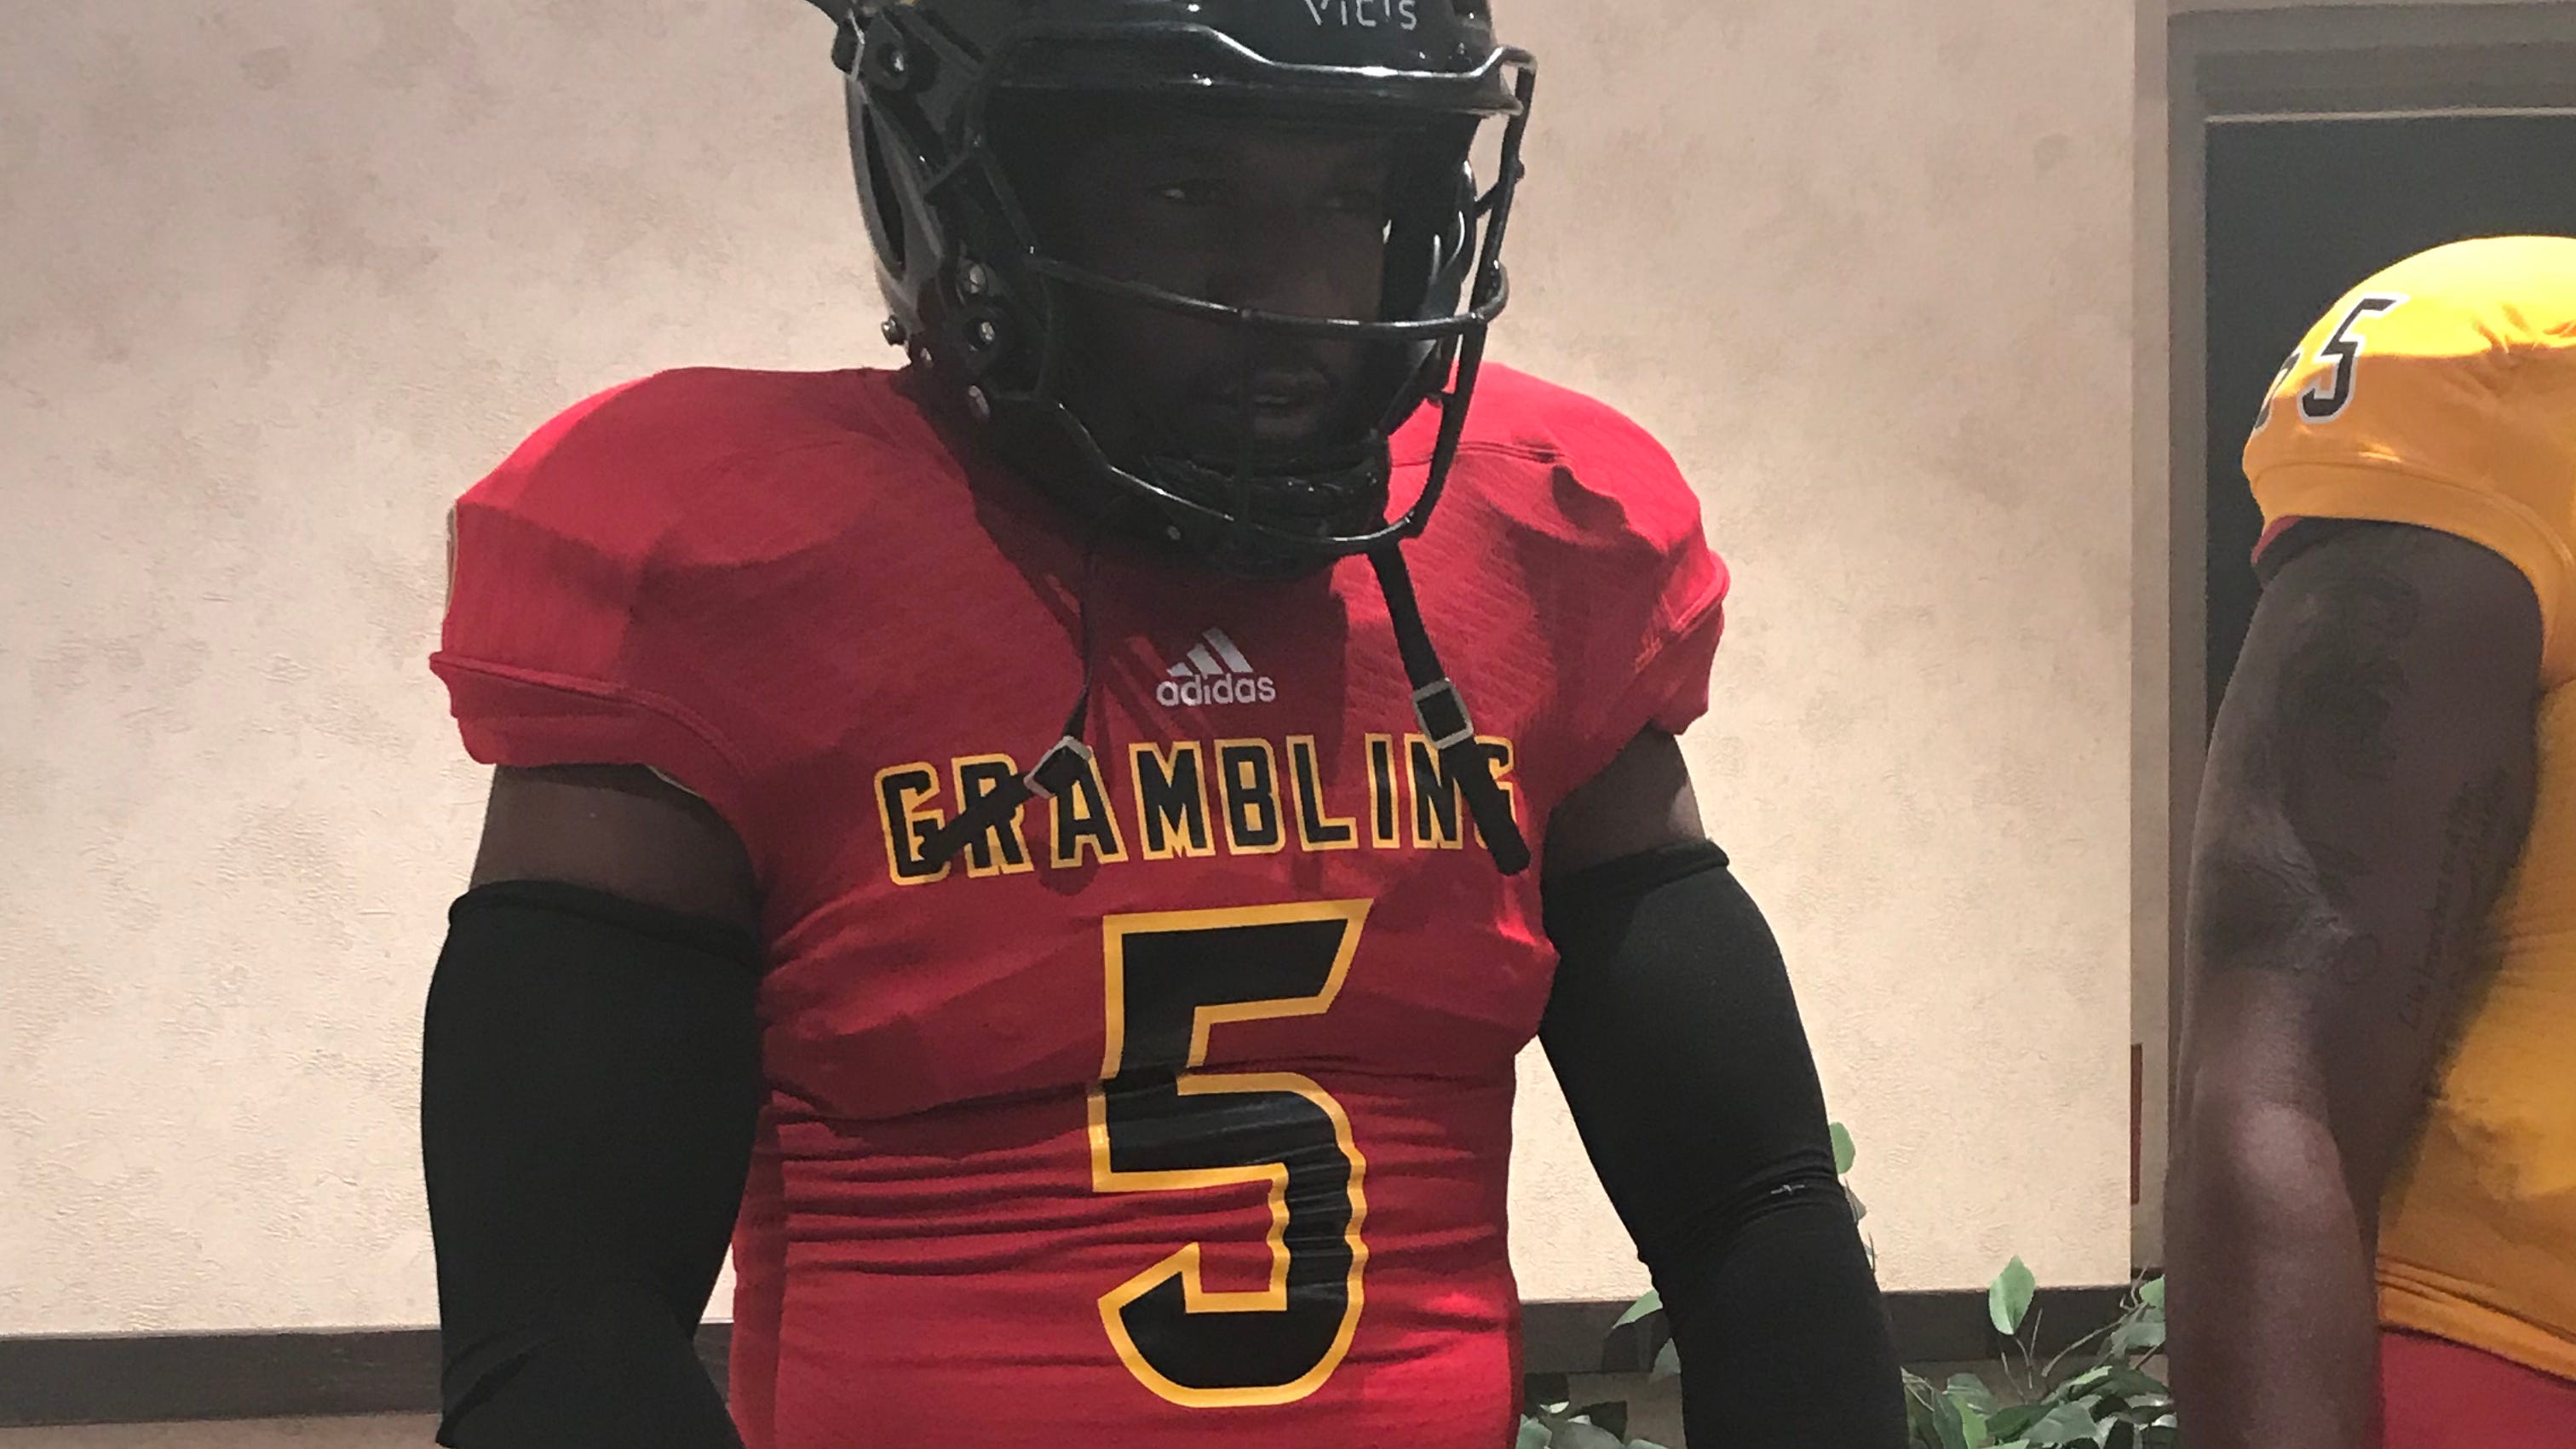 Grambling State unveils new adidas football uniforms